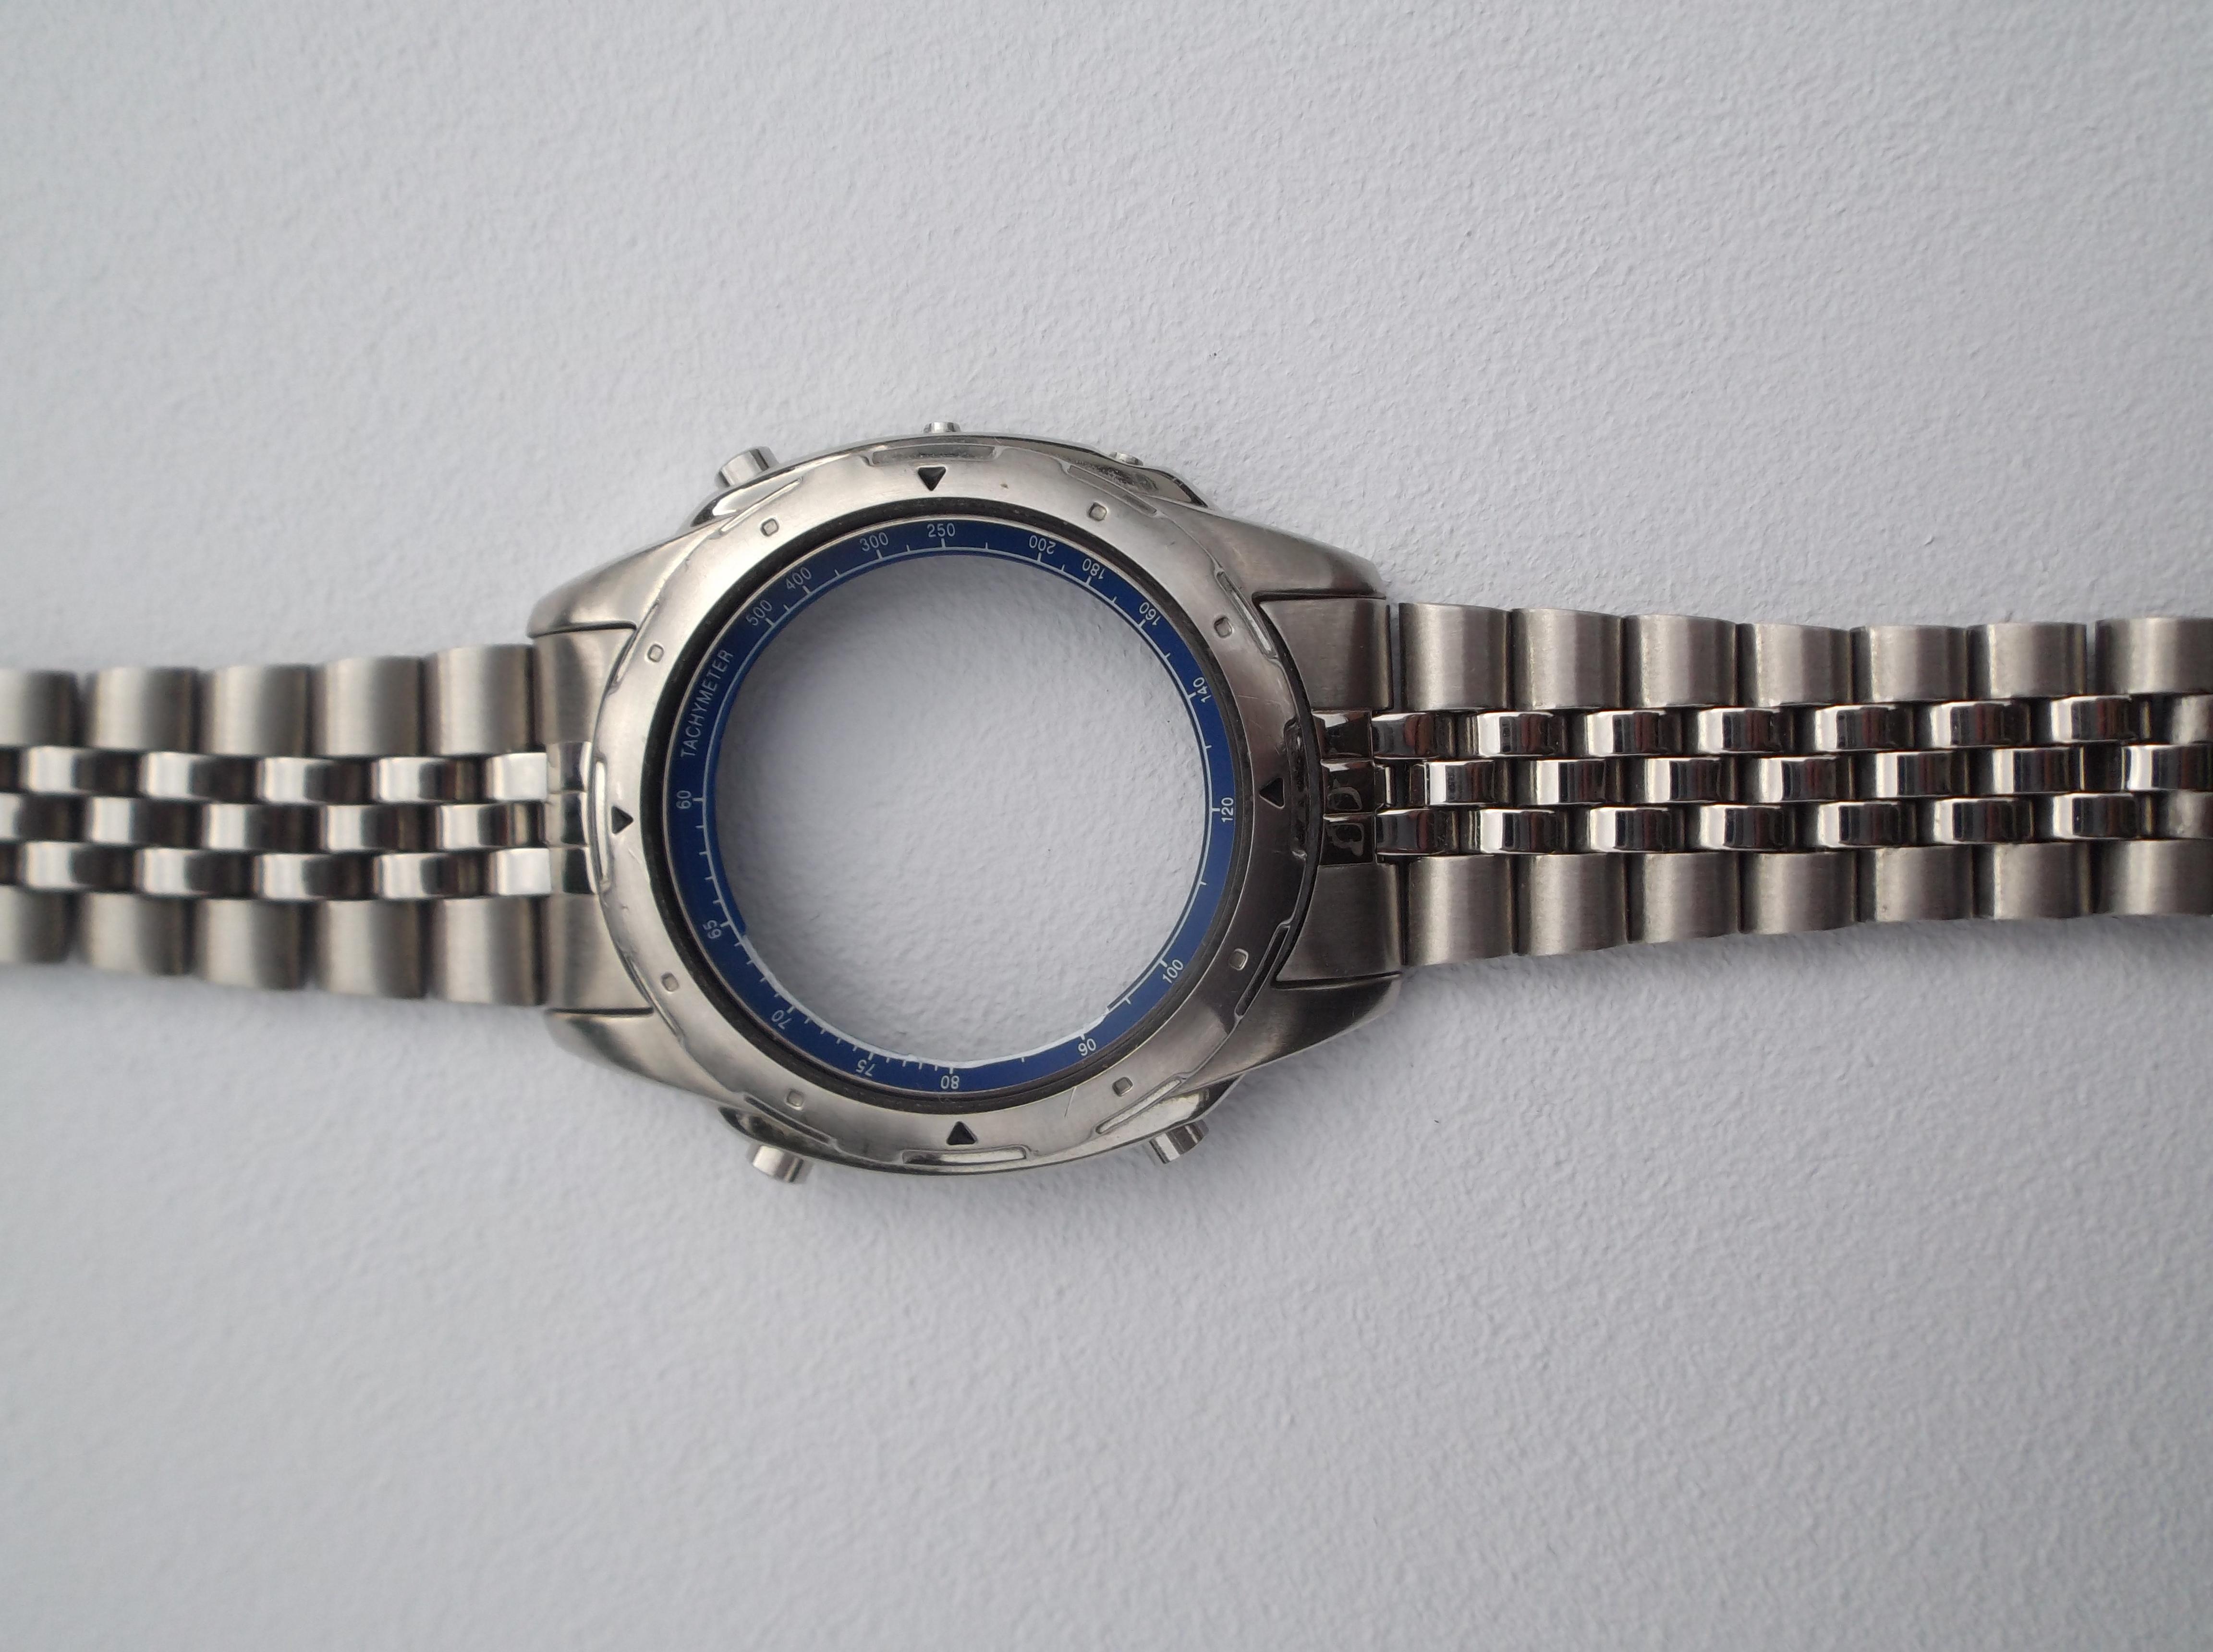 Seiko Tachymeter Removal - Watch Repairs Help & Advice - Watch Repair Talk